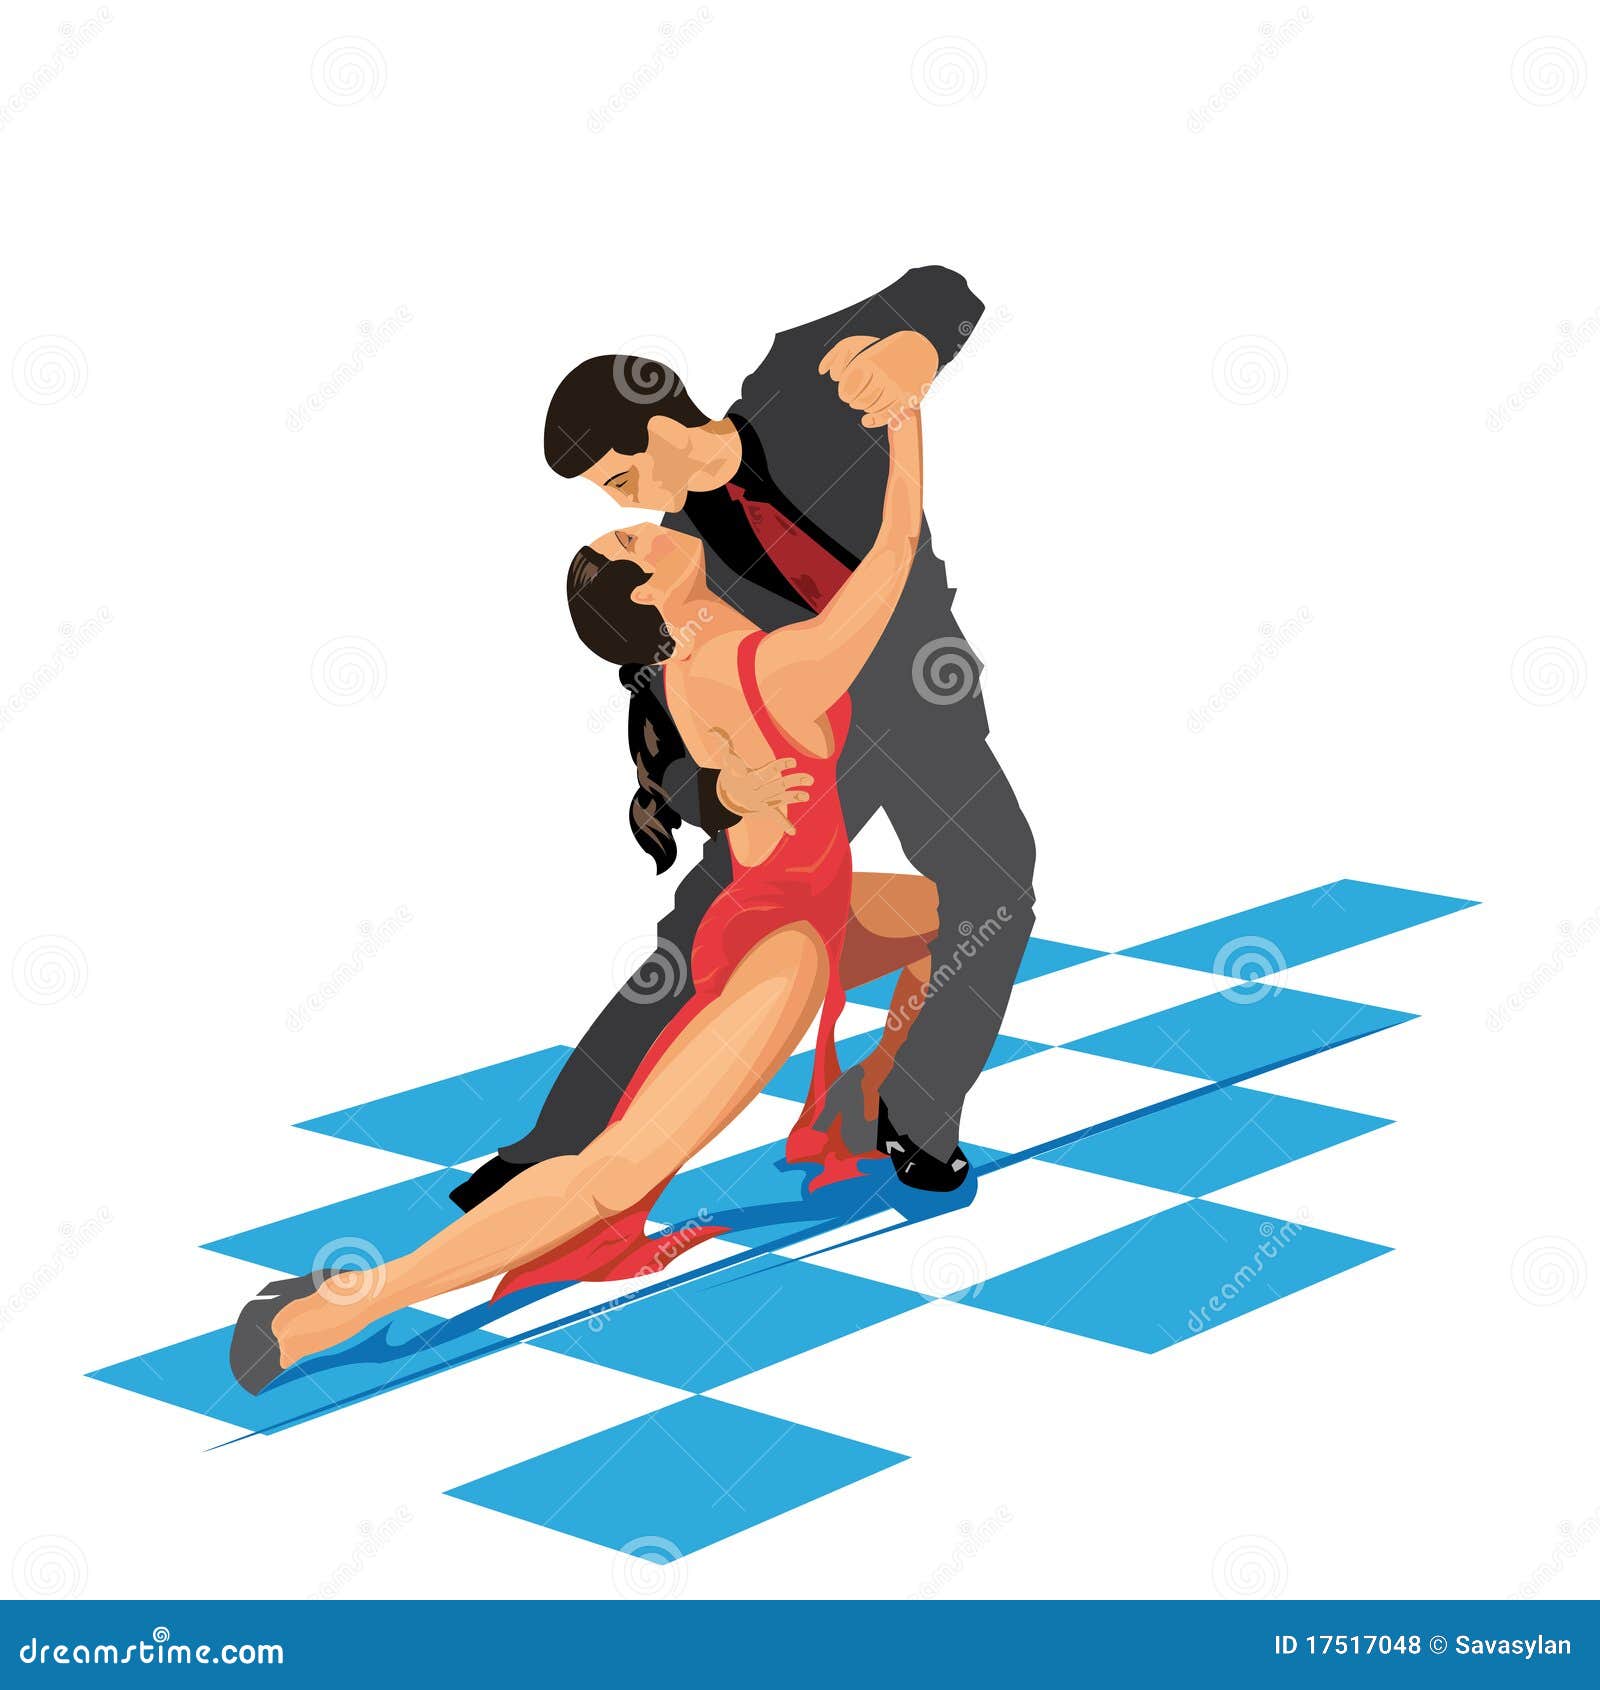 clipart tango argentino - photo #30